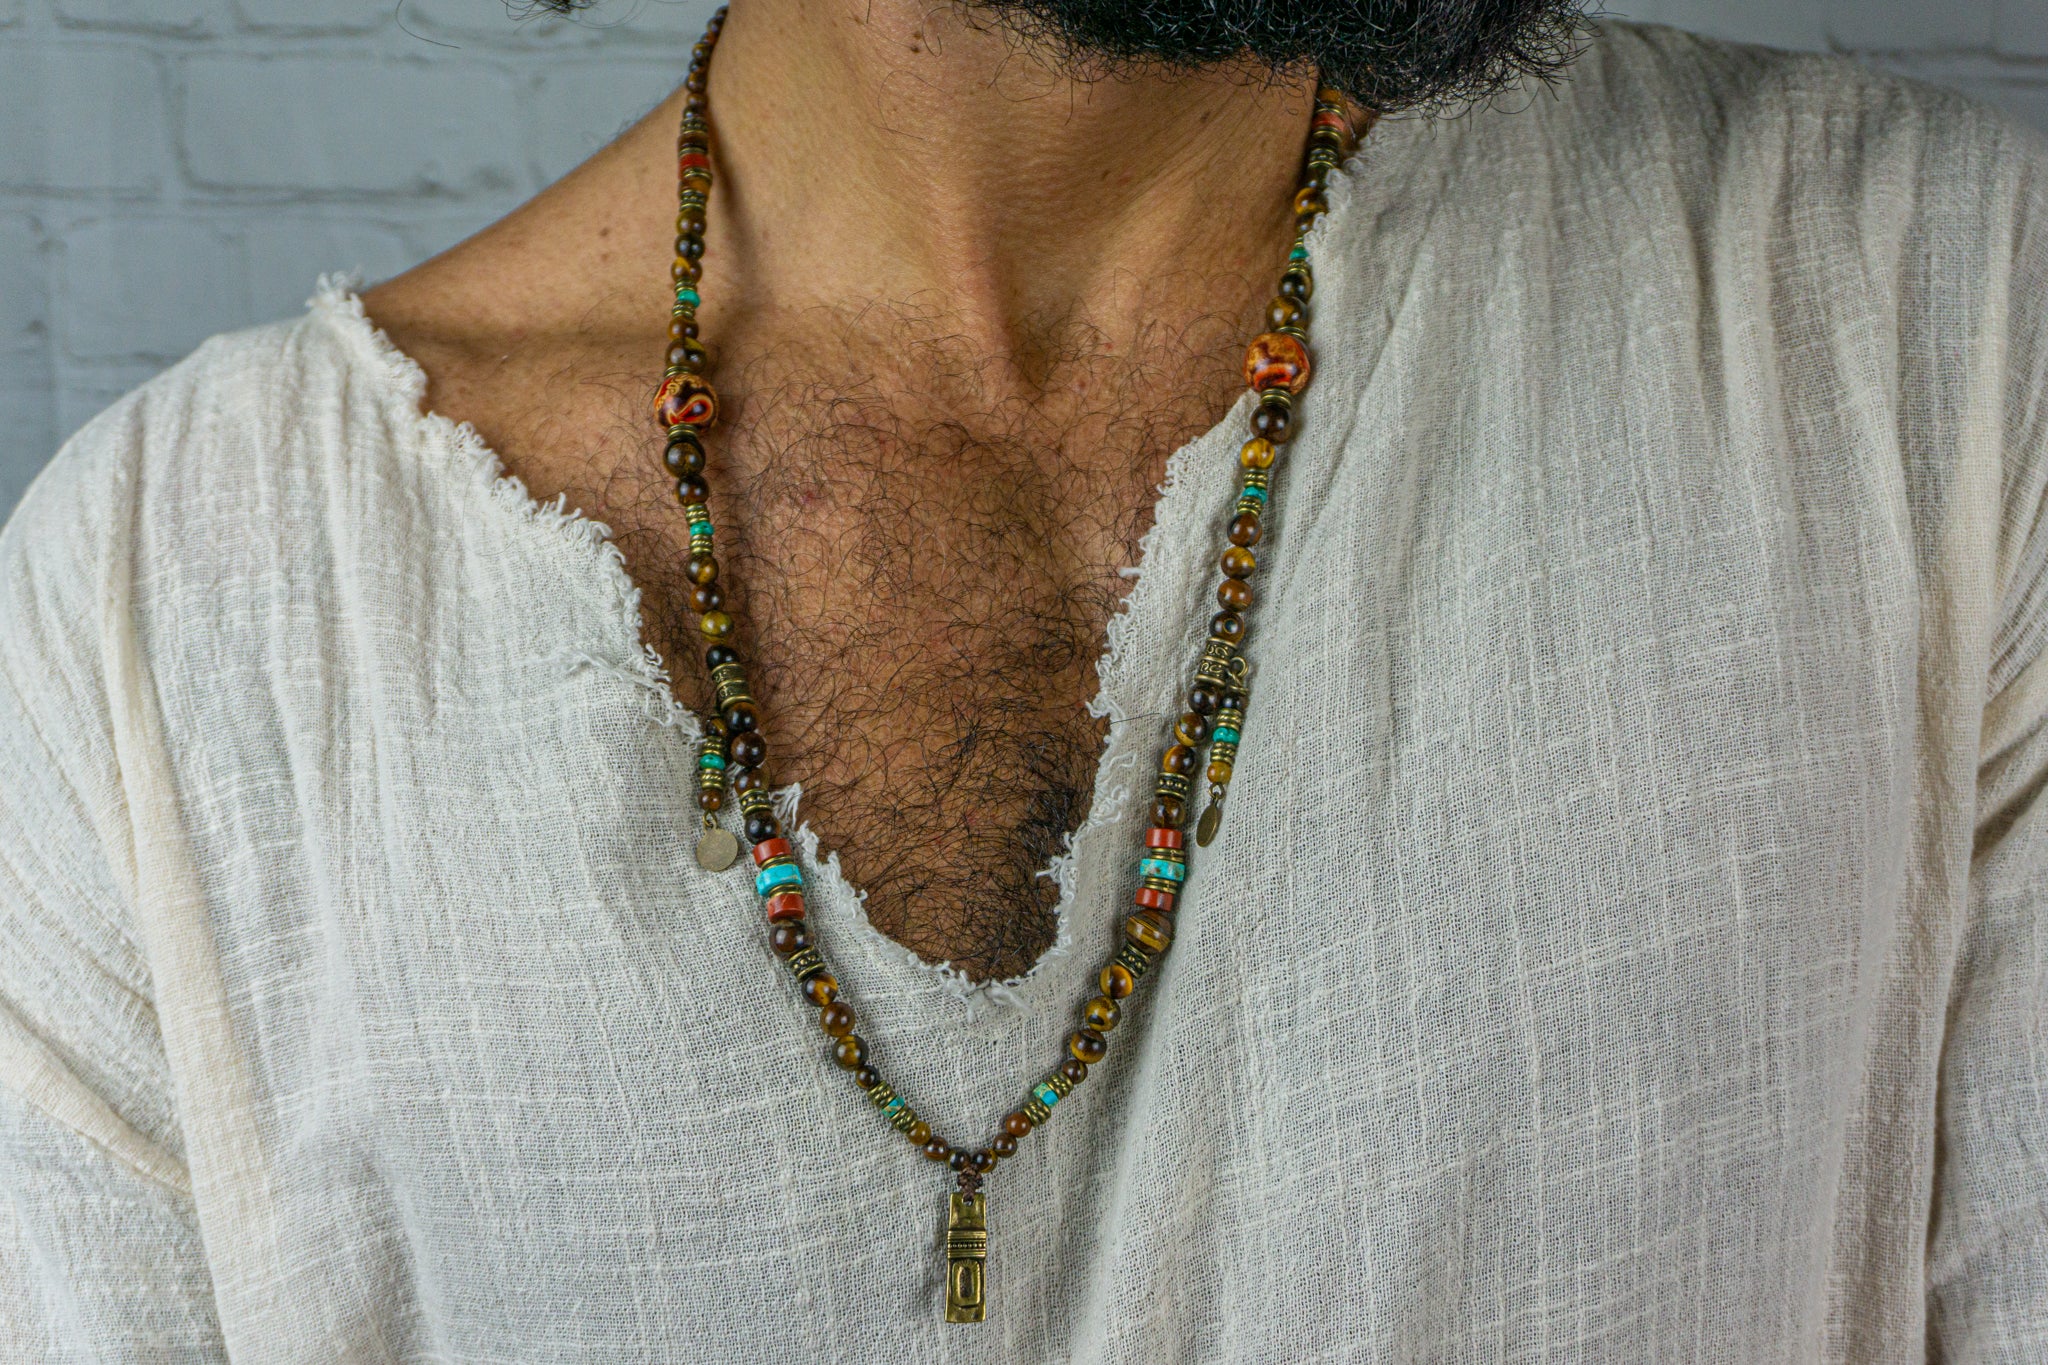 Adjustable Colorful Macrame Boho Necklace For Men - Hippie Necklace